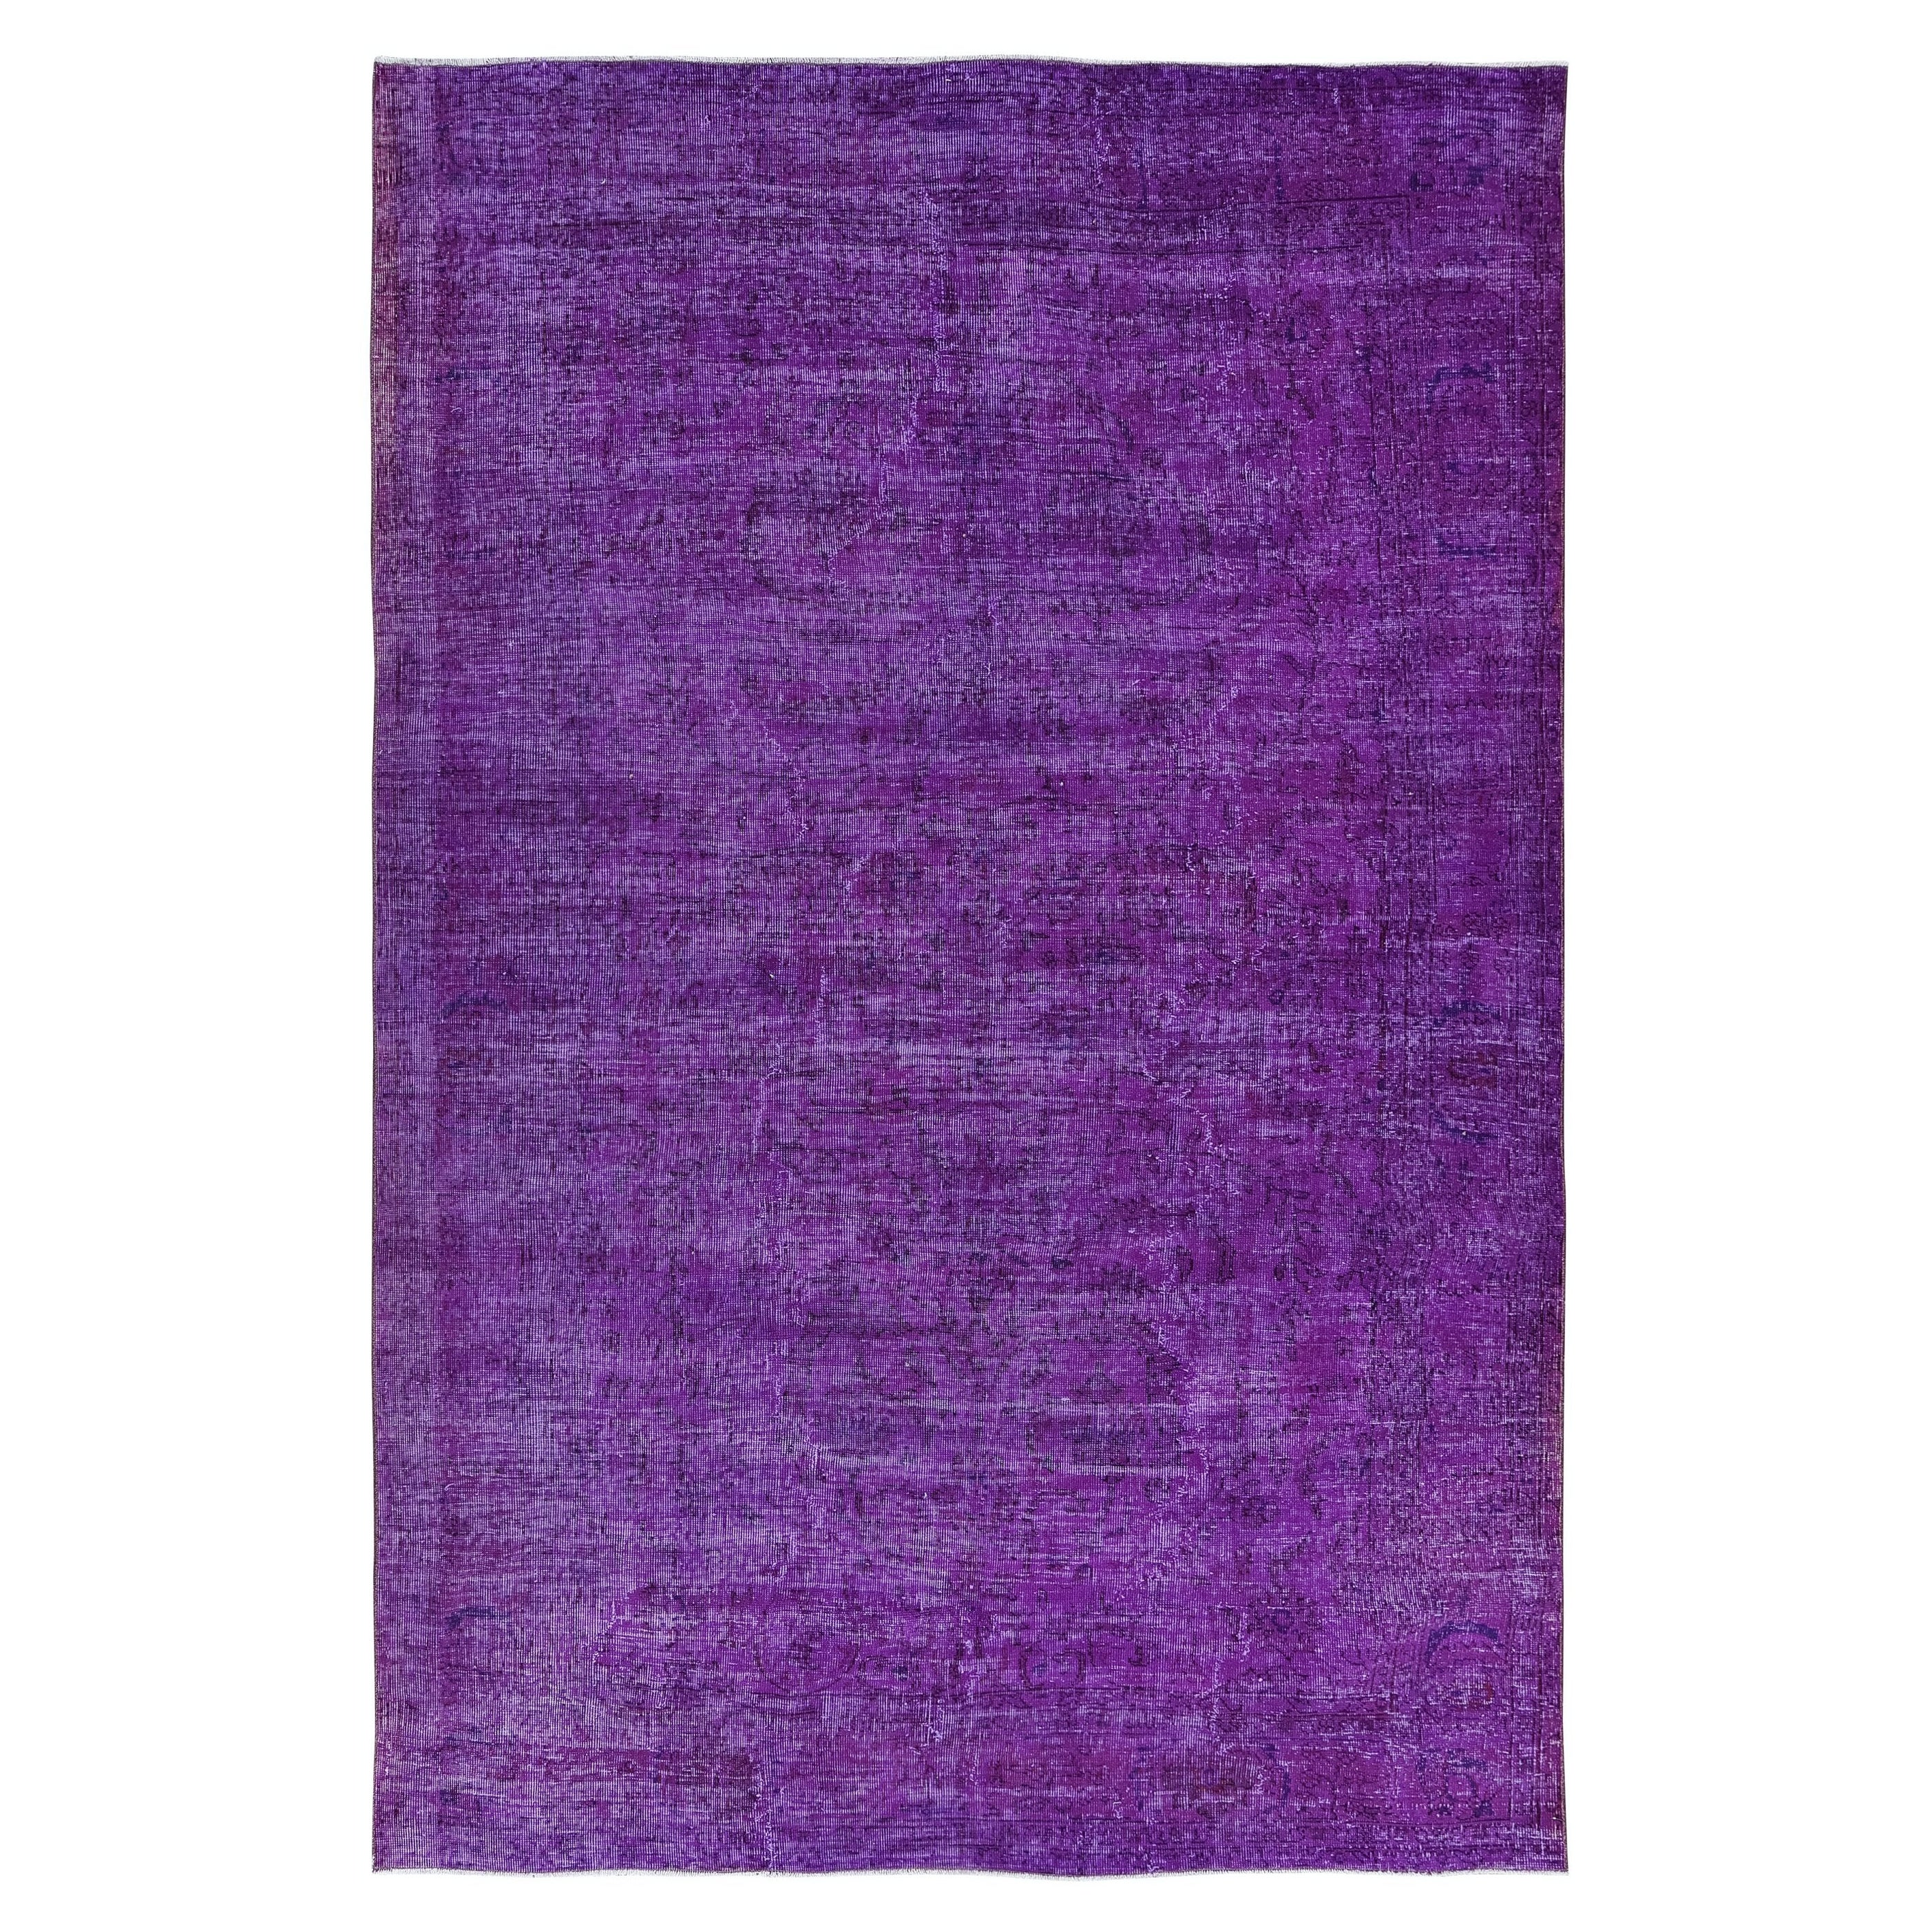 7x10.2 Ft Unique Handknotted Modern Large Rug in Purple. Turkish Bohem Carpet